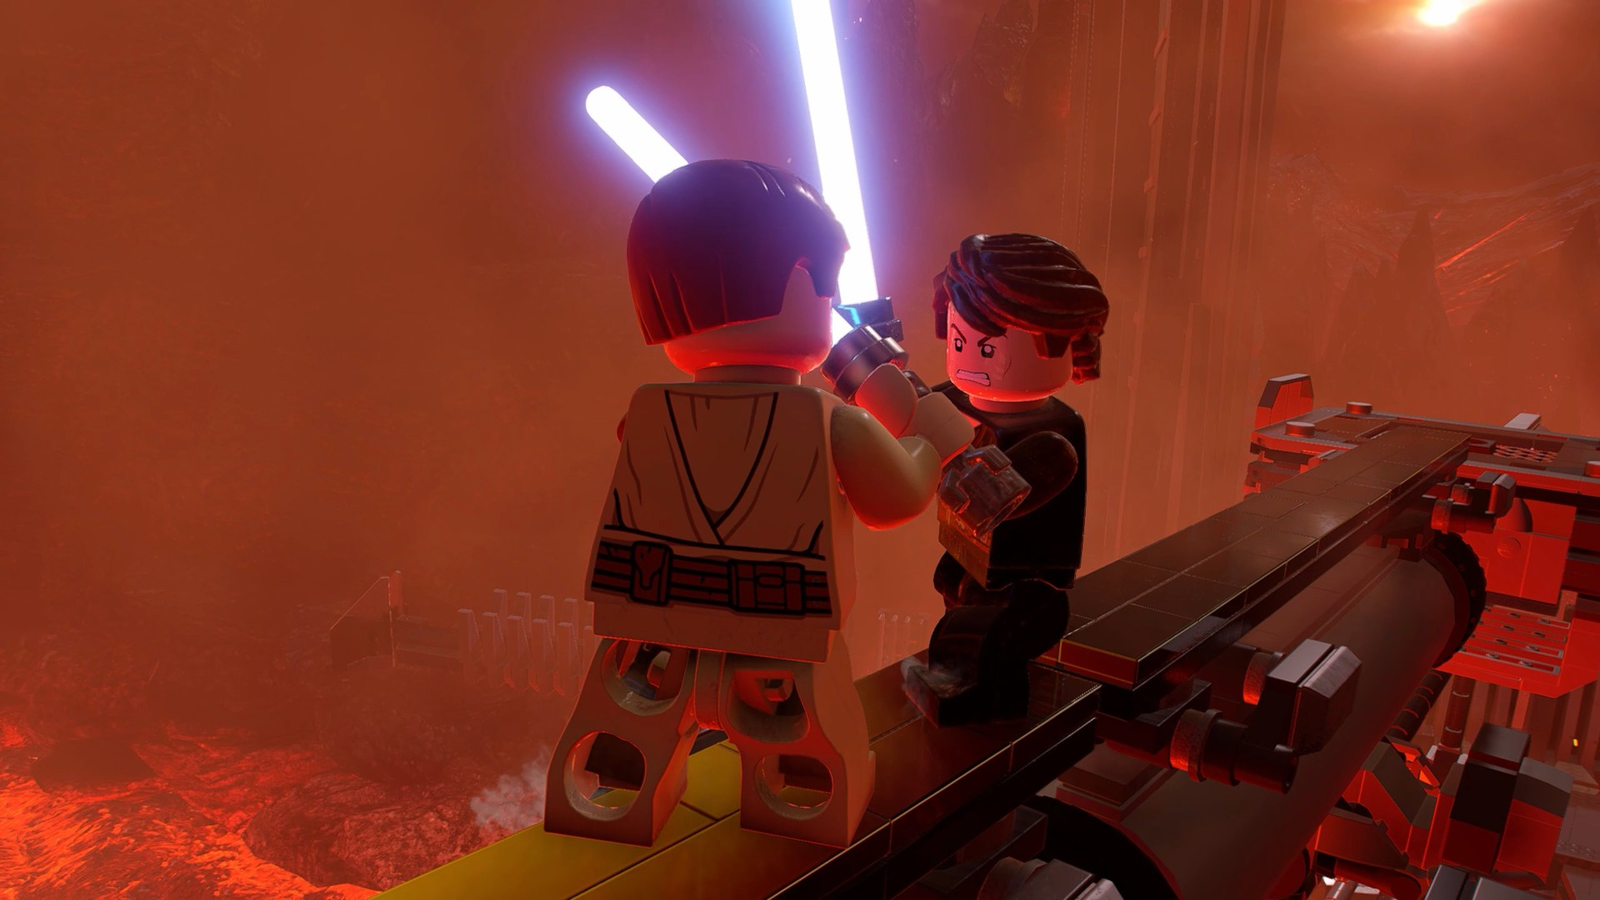 Lego Star Wars: A Saga Skywalker para PS4 TT